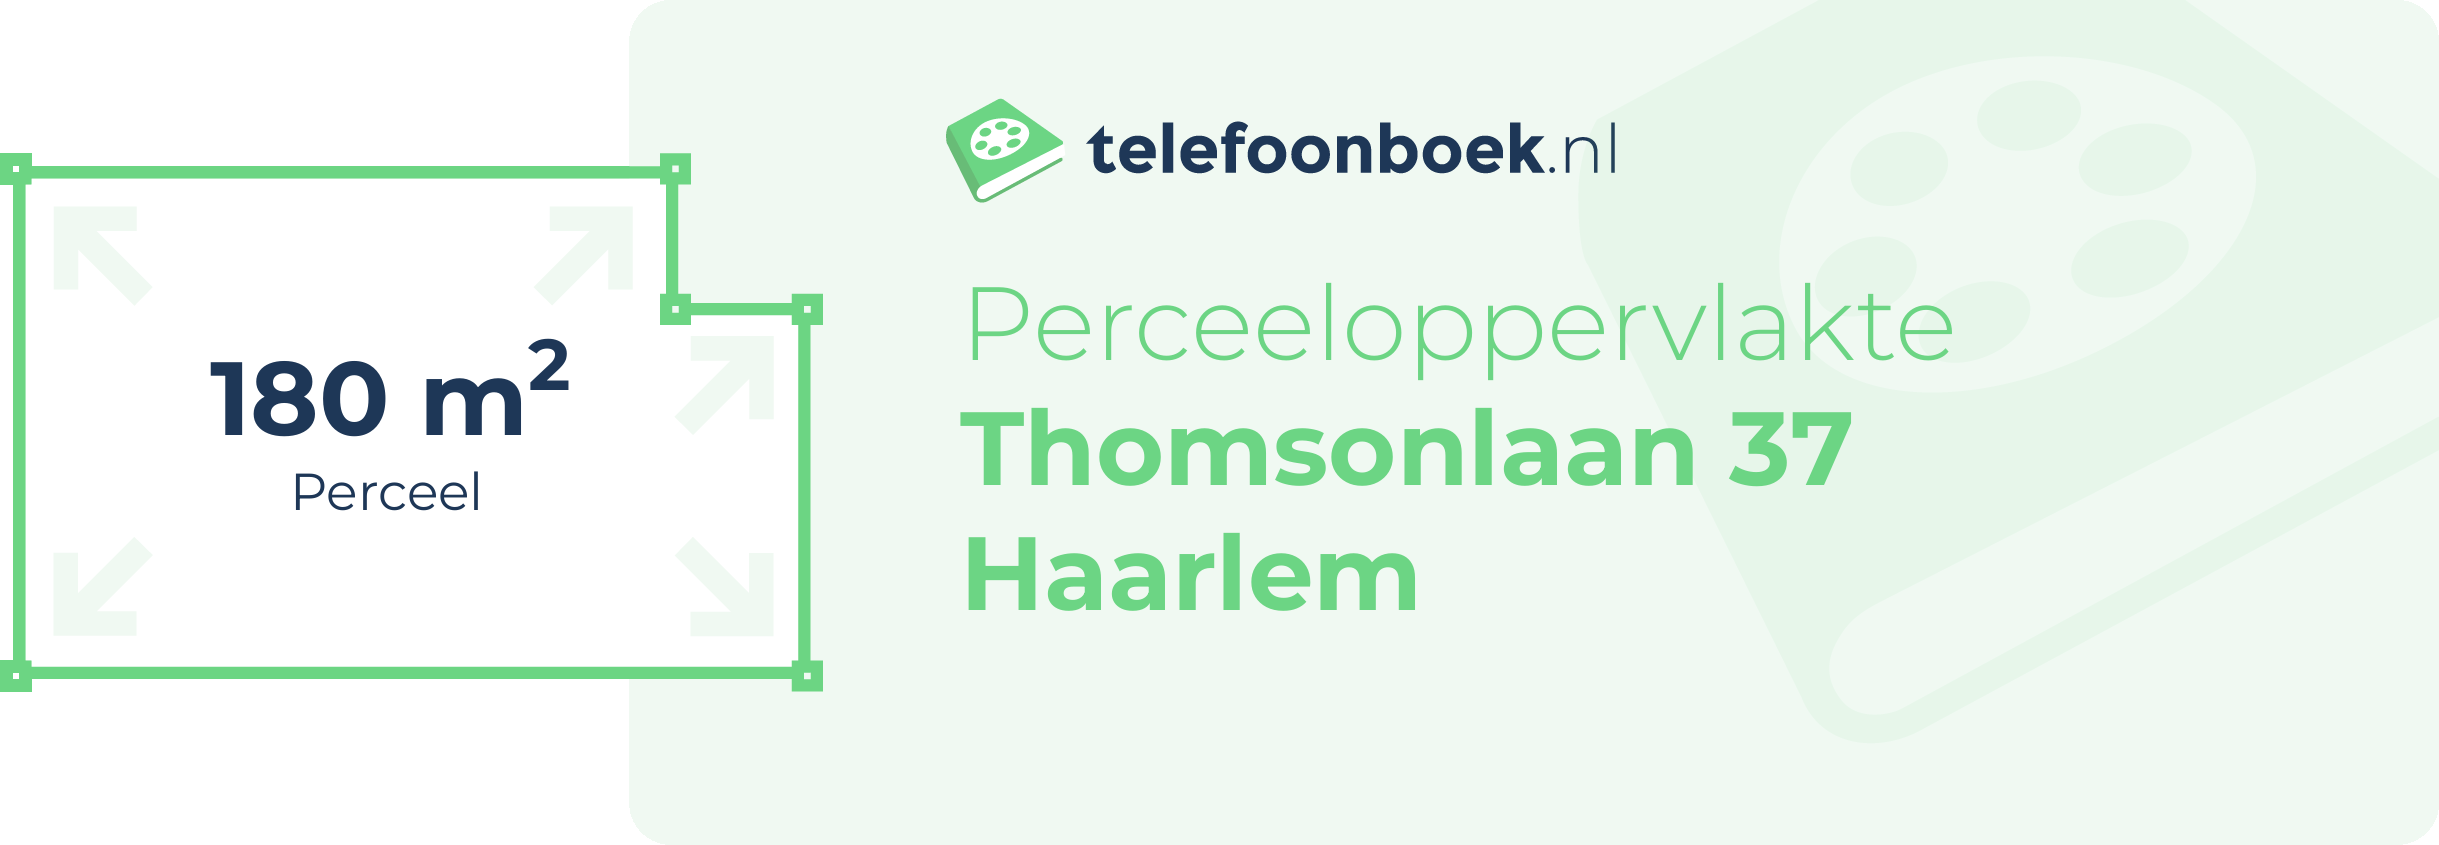 Perceeloppervlakte Thomsonlaan 37 Haarlem